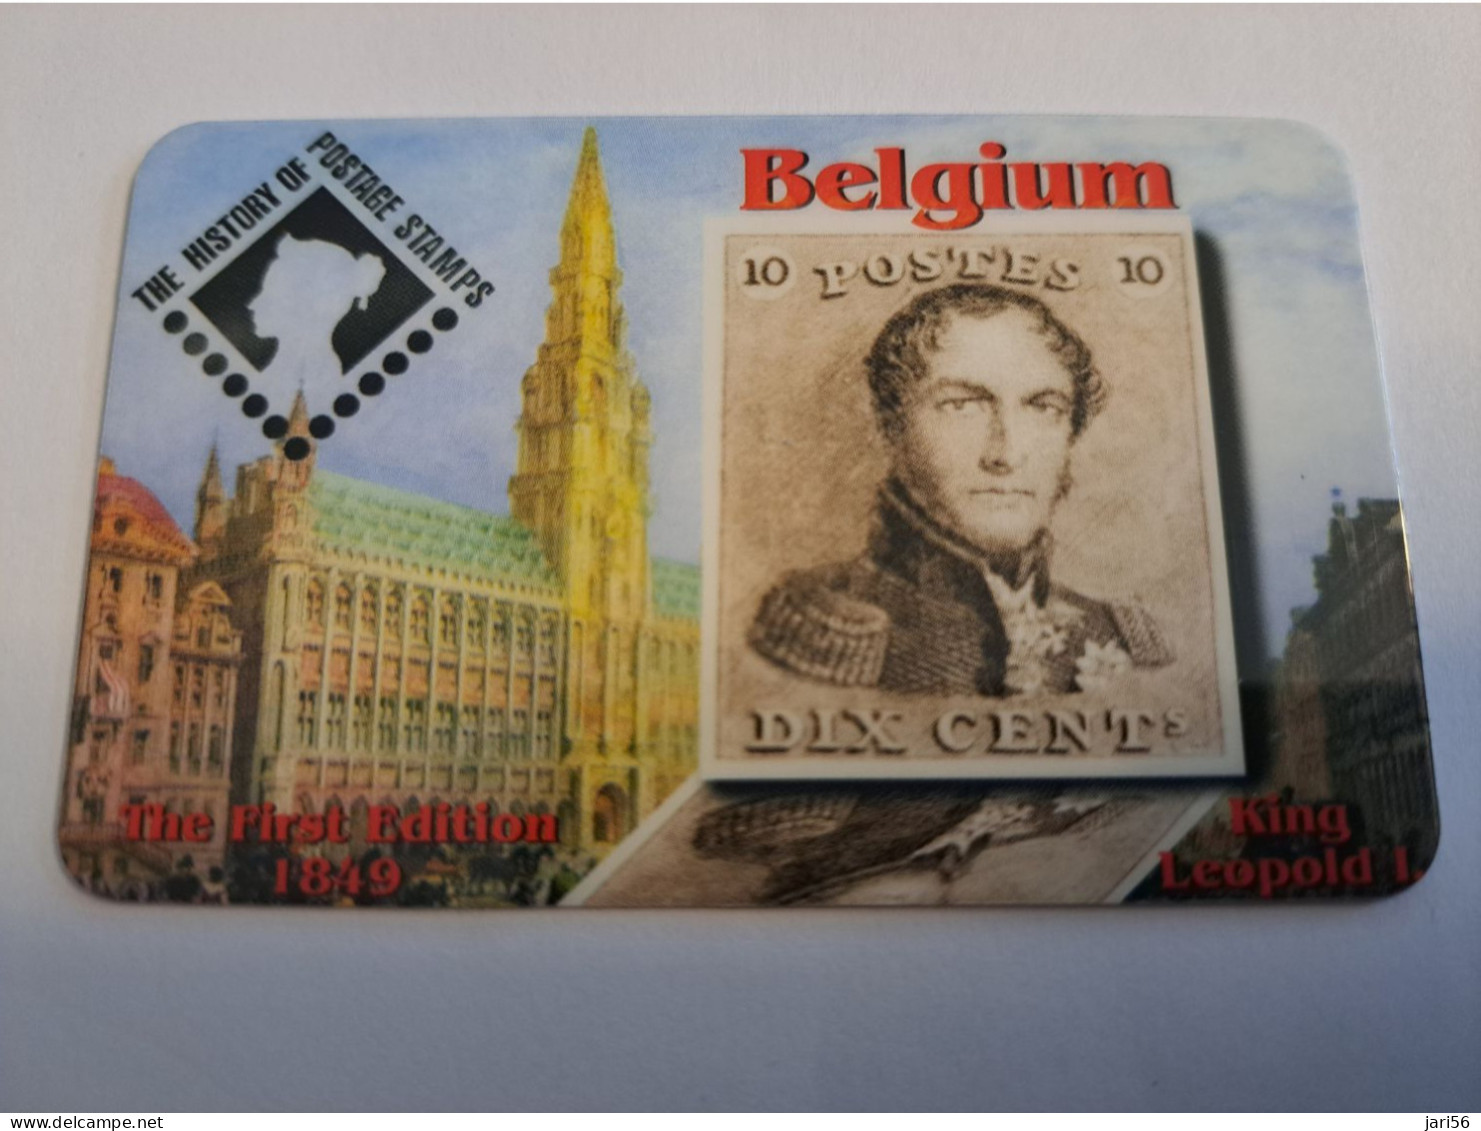 GREAT BRITAIN /20 UNITS /BELGIUM   1849 FIRST EDITION   / DATE 09/99 PREPAID CARD / LIMITED EDITION/ MINT  **15923** - [10] Sammlungen